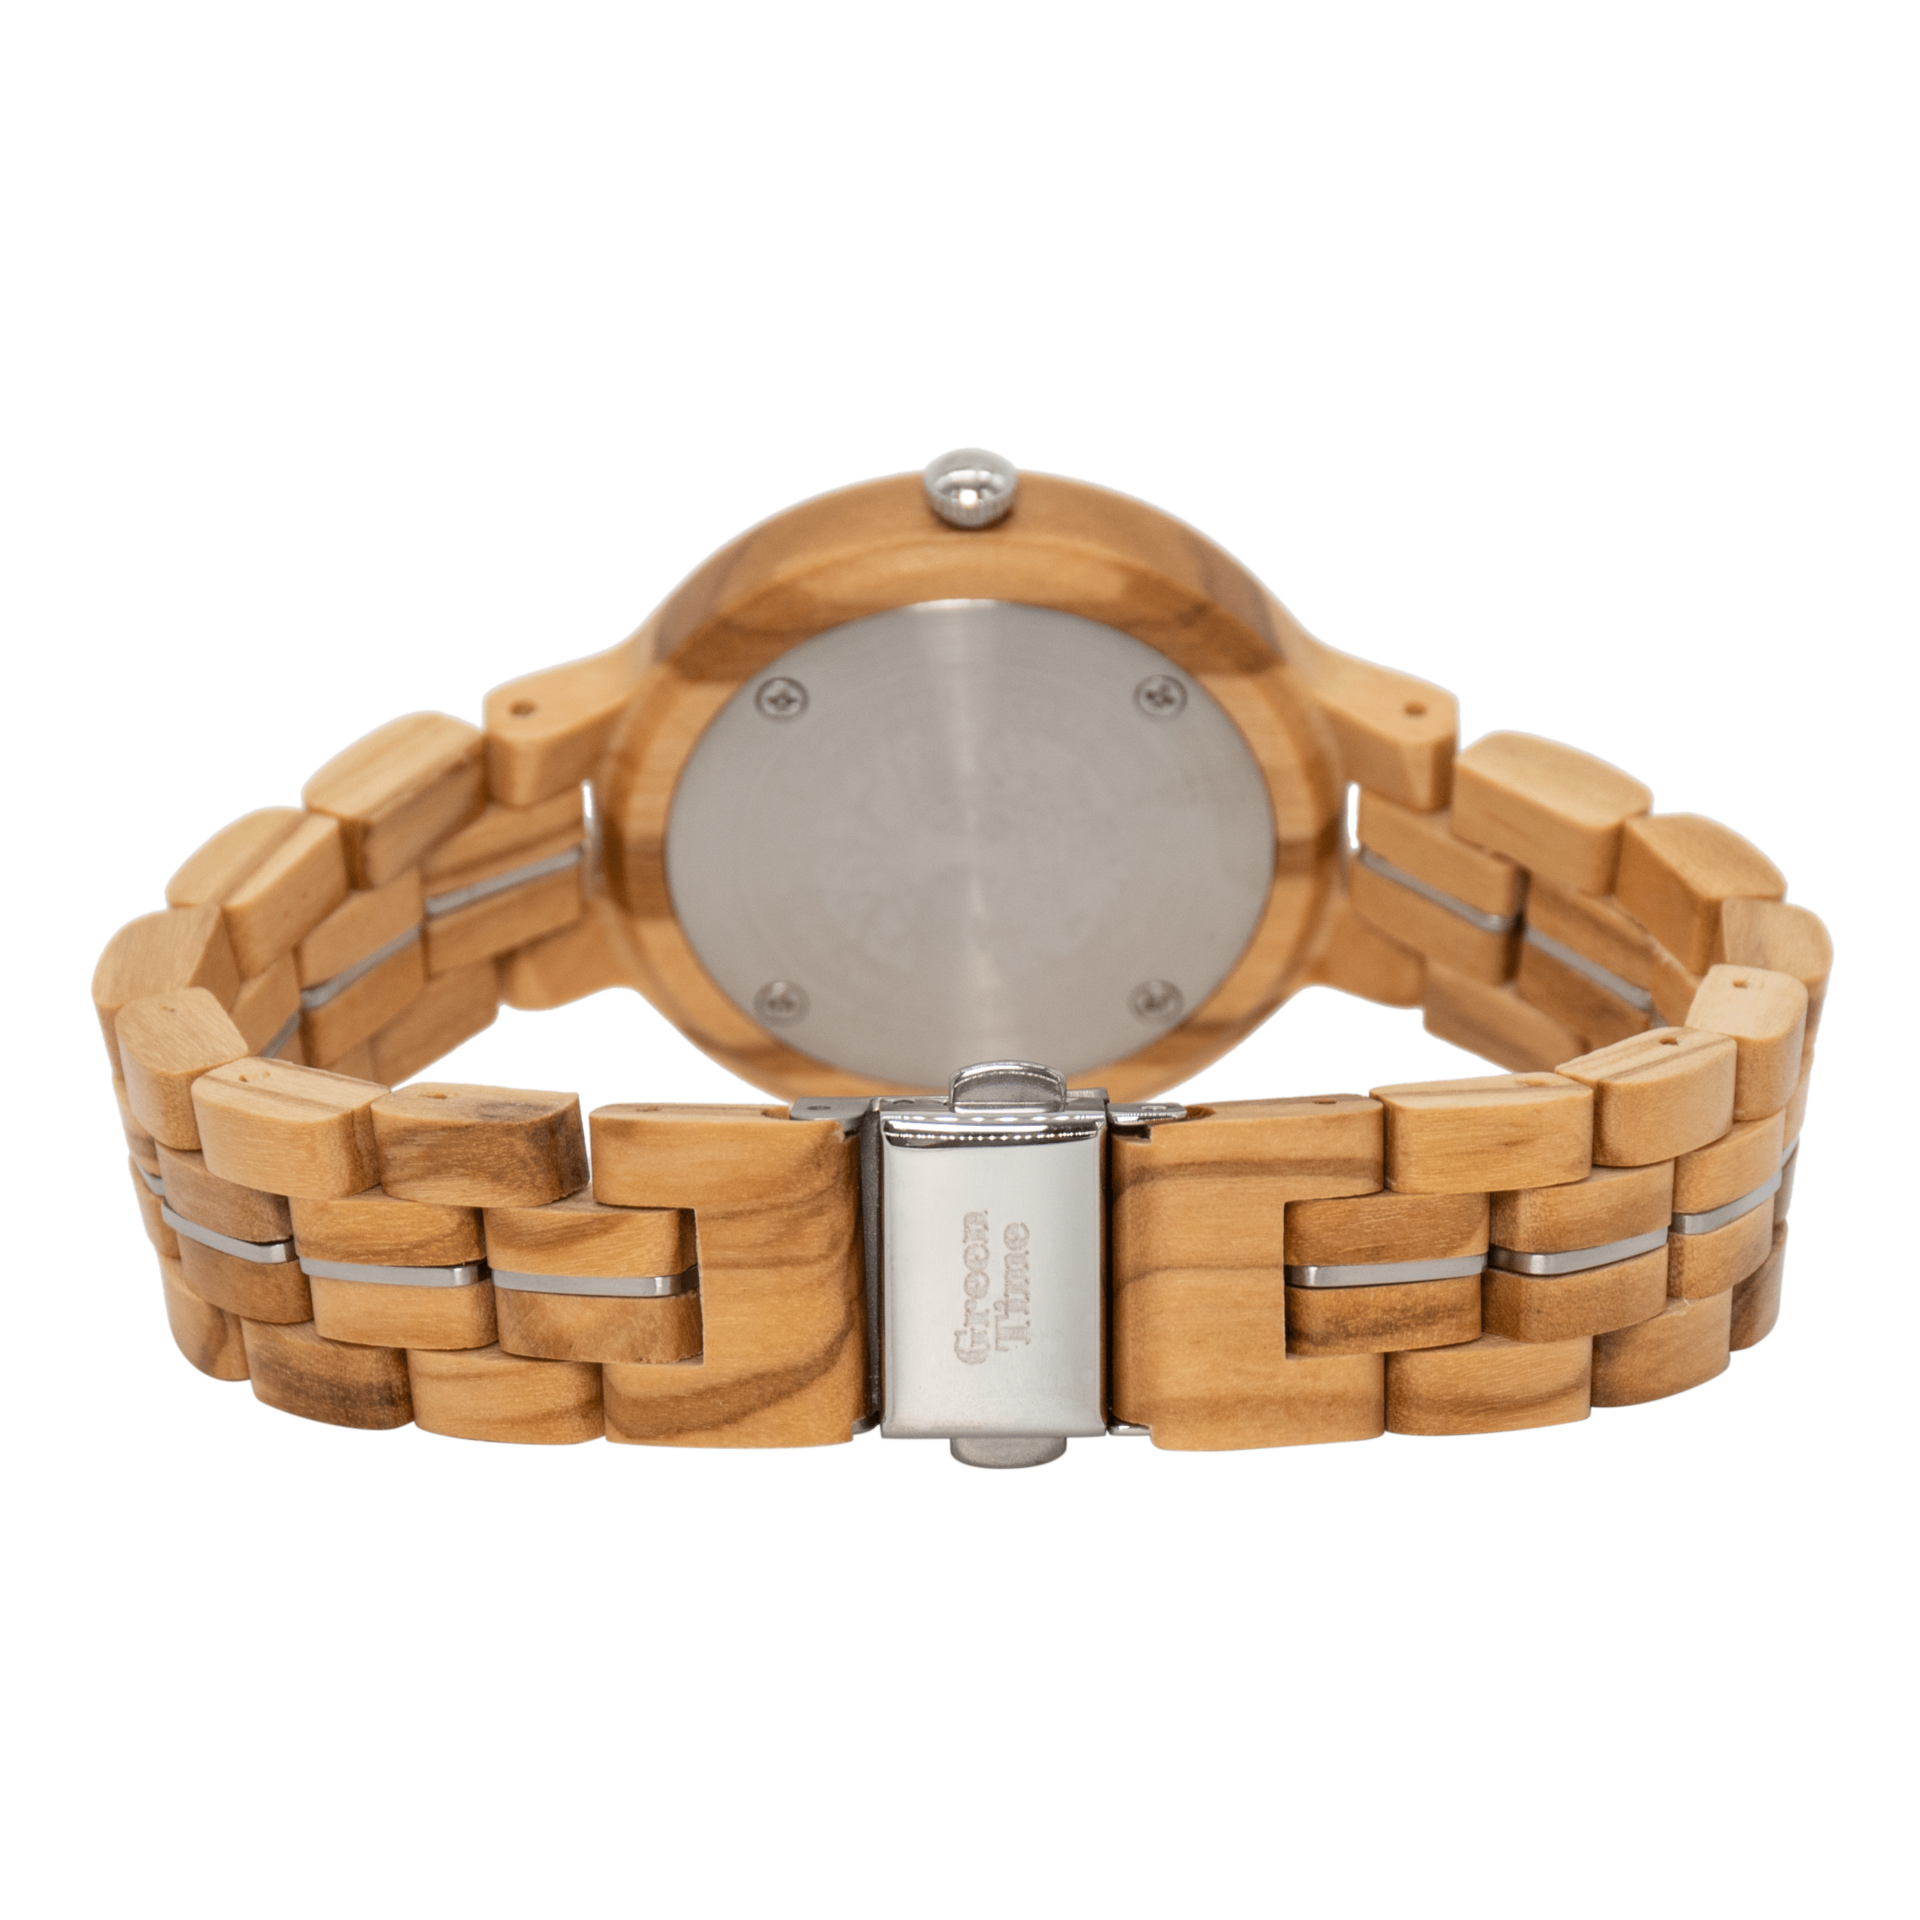 Wooden GreenTime watch - Greentime wood watch